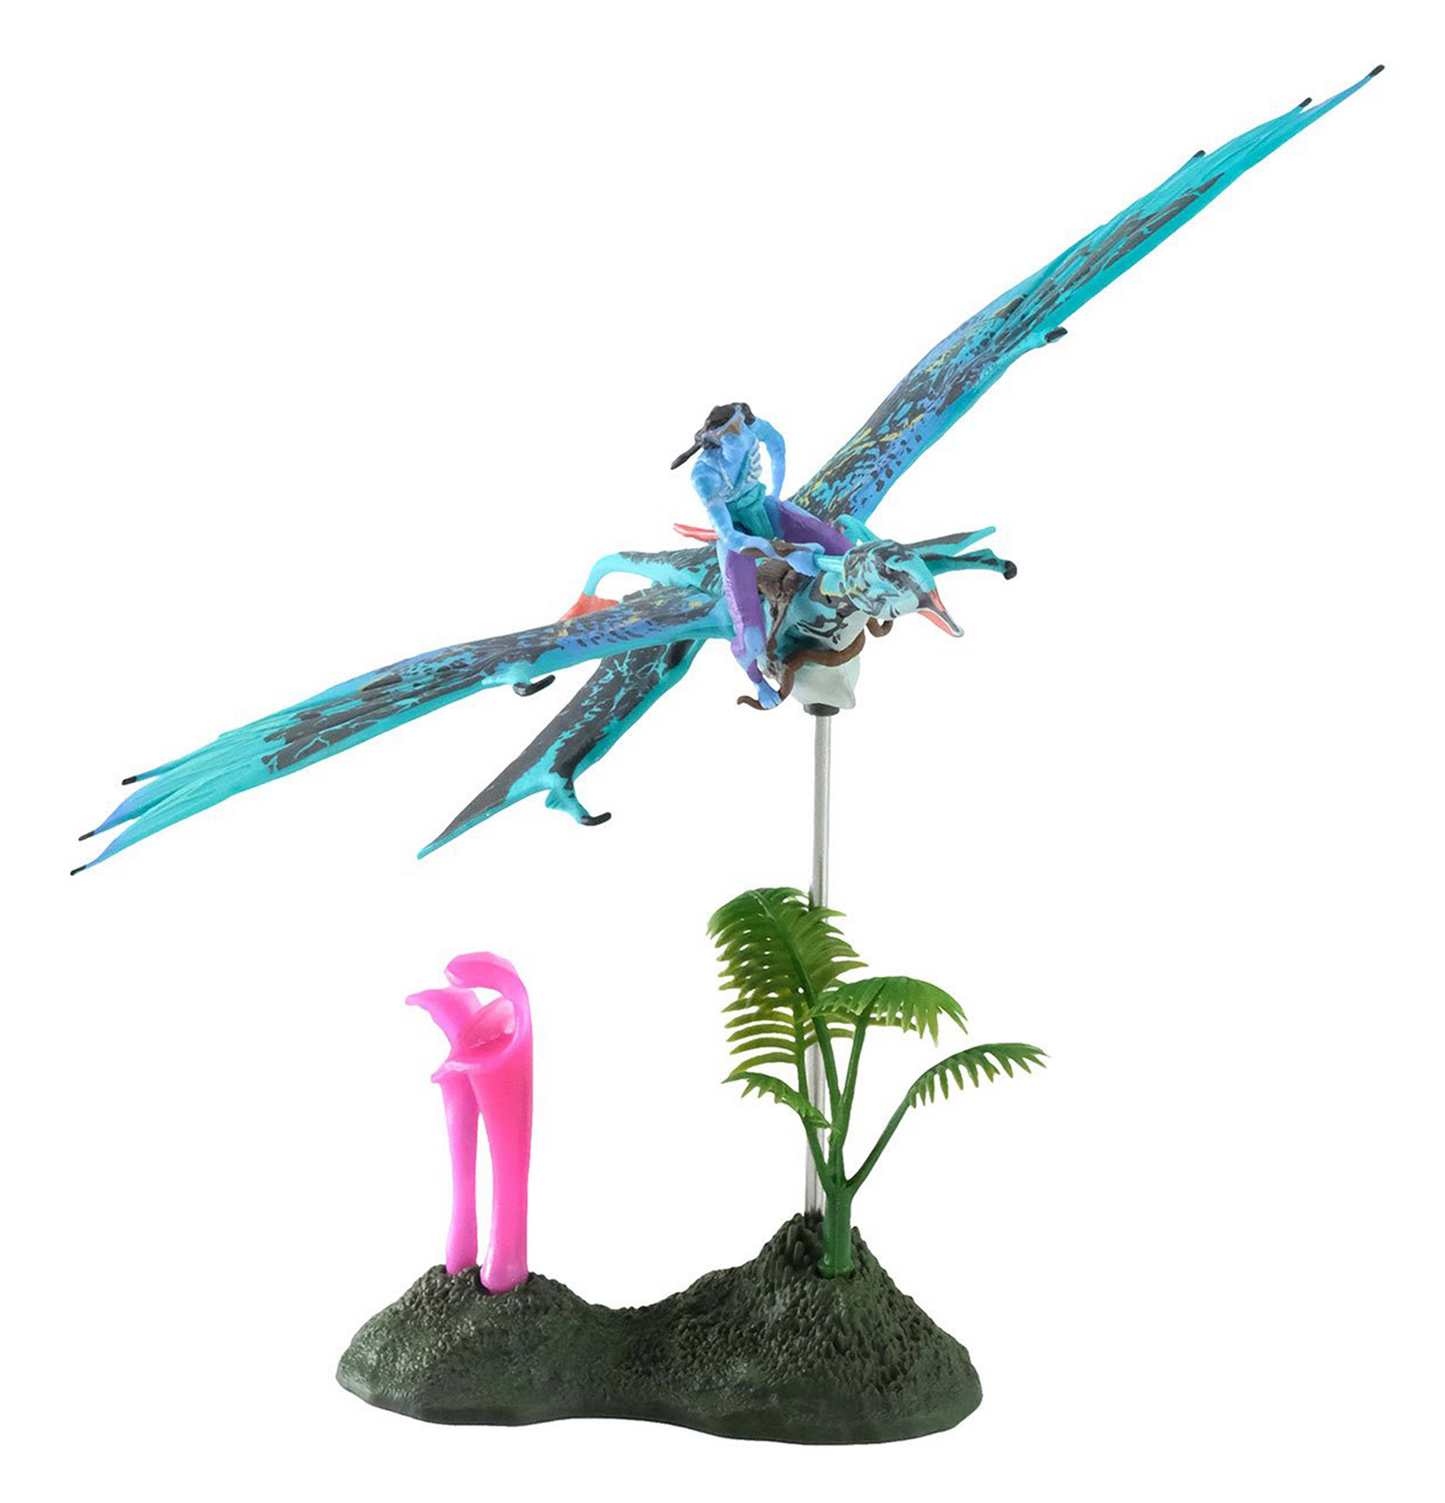 Avatar World of Pandora Neytiri and Creature Seze Banshee Deluxe Playset